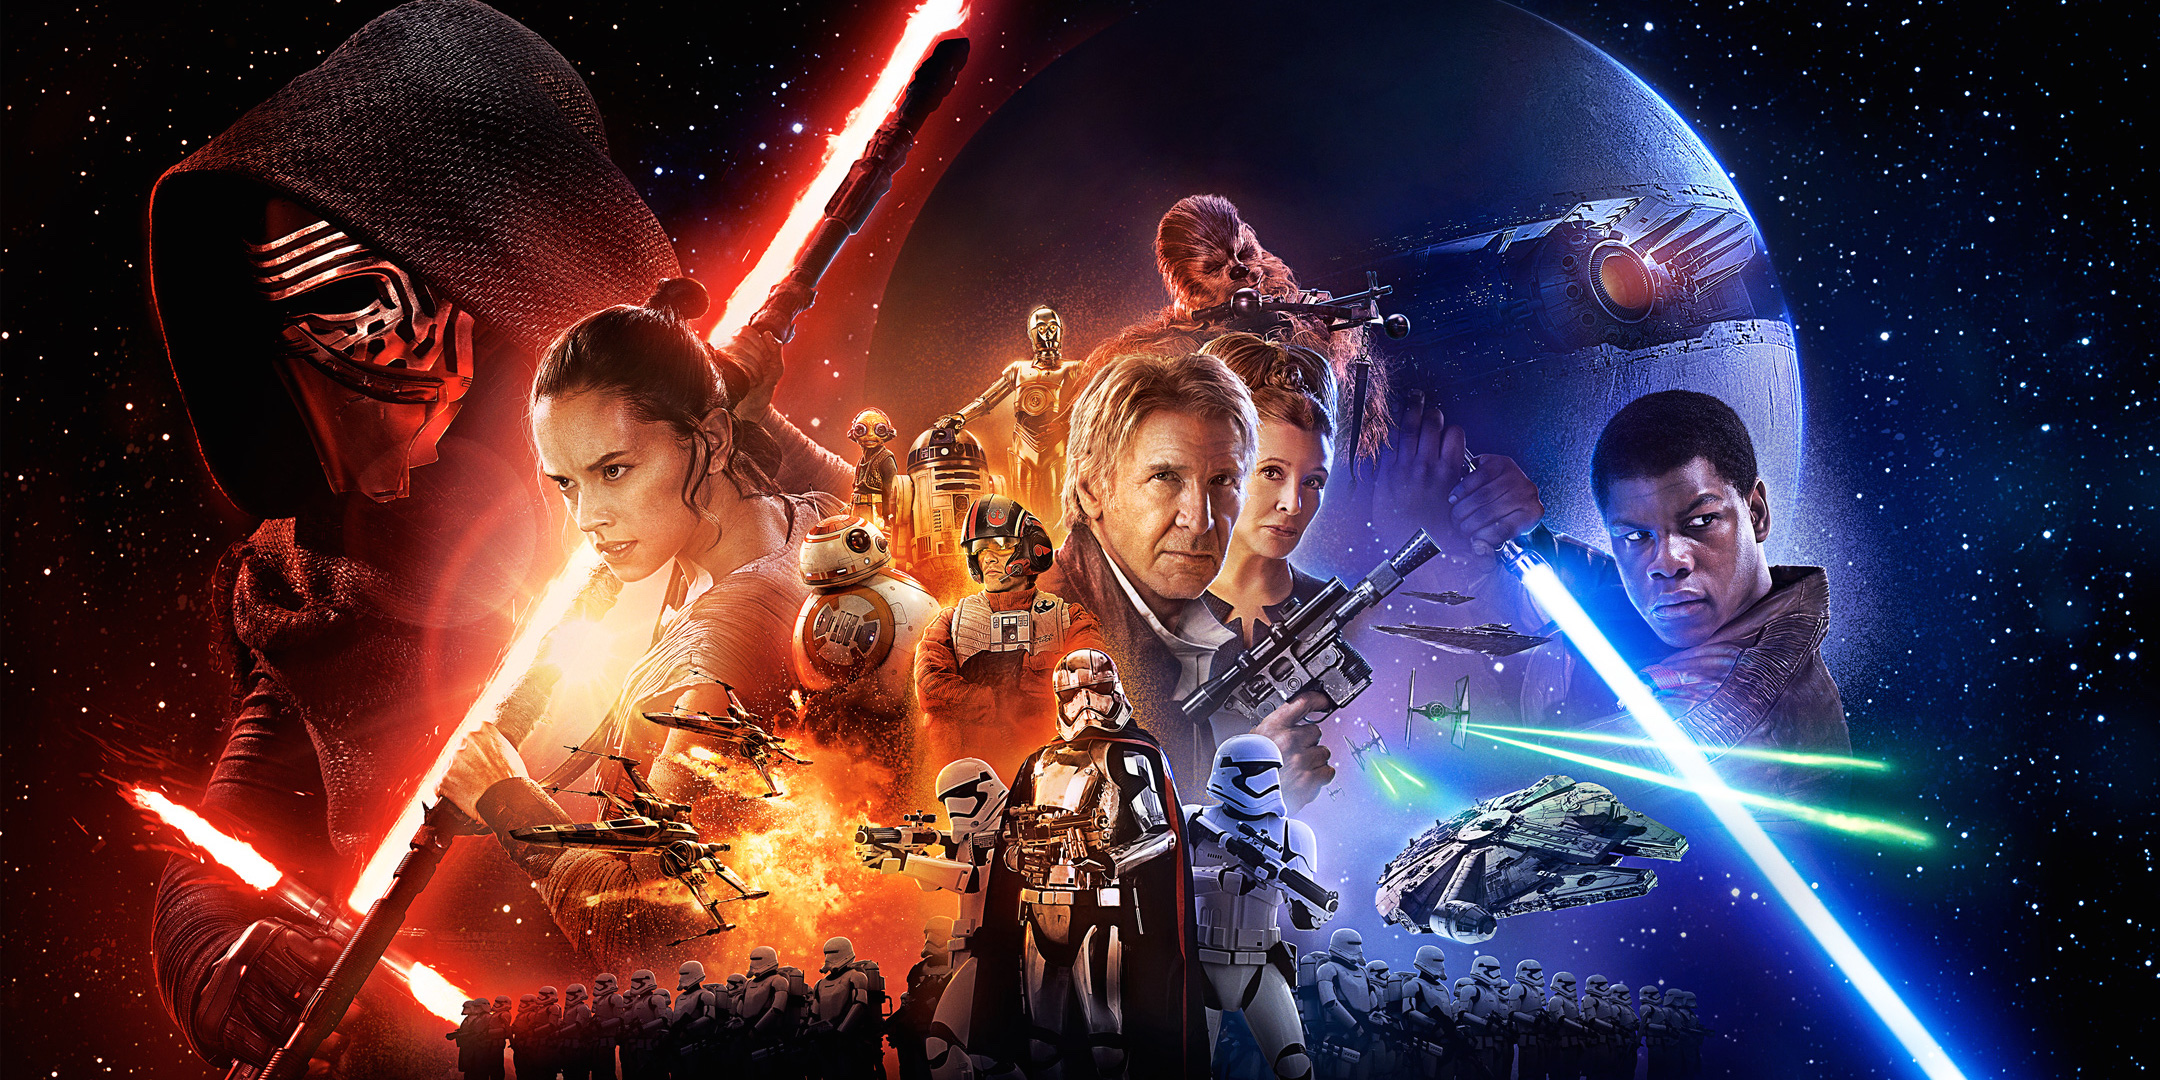 Star Wars: Episode VII - The Force Awakens Blu-ray (Blu-ray + DVD + Digital  HD)